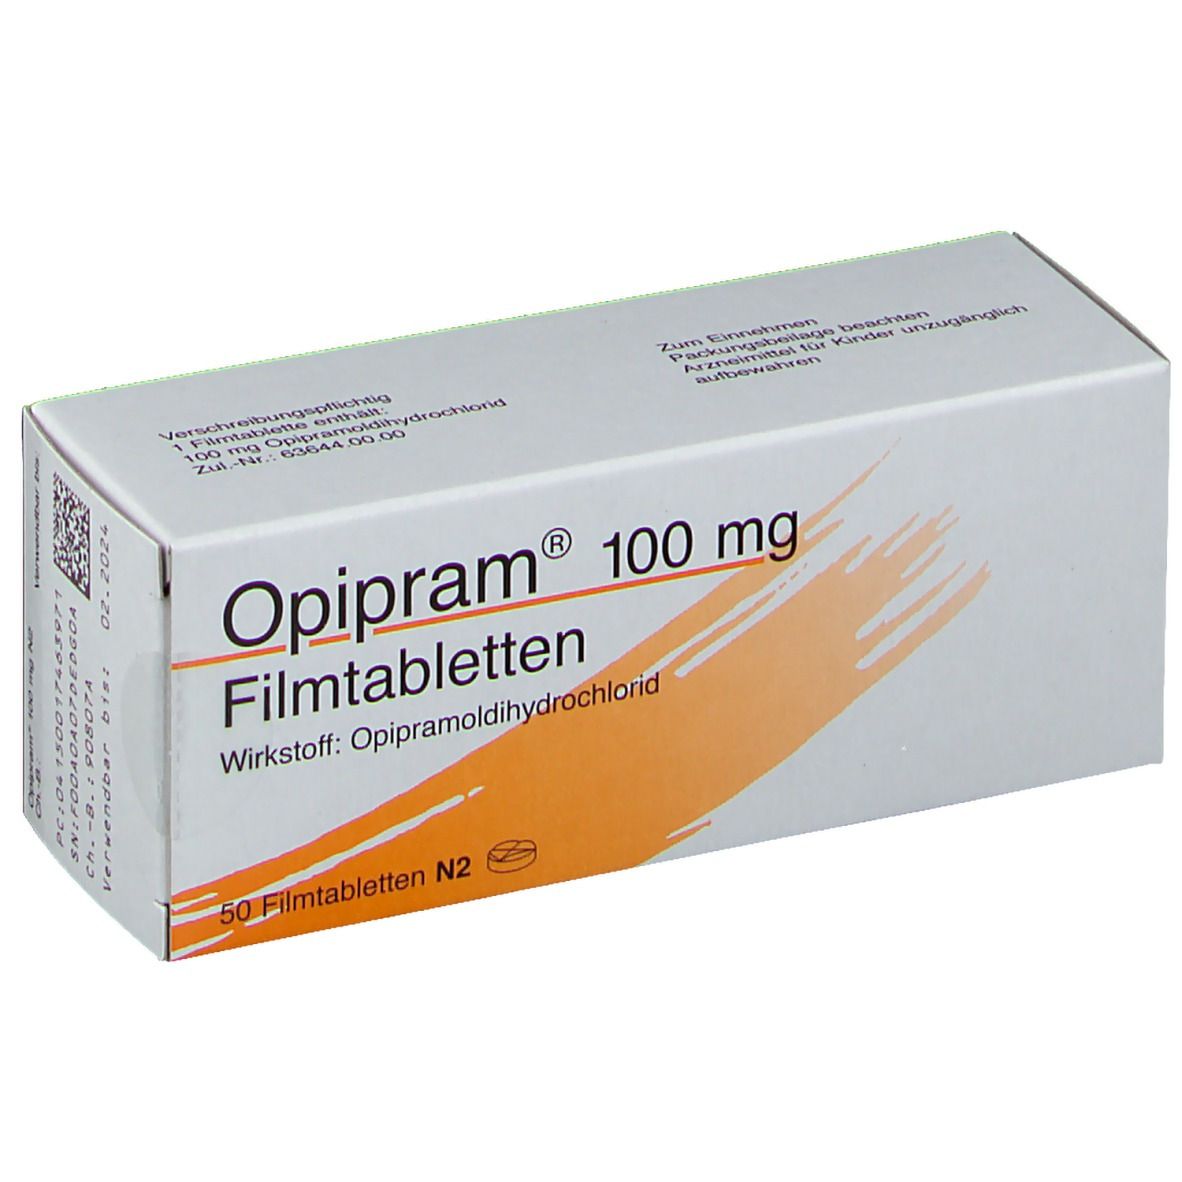 Opipram® 100 mg